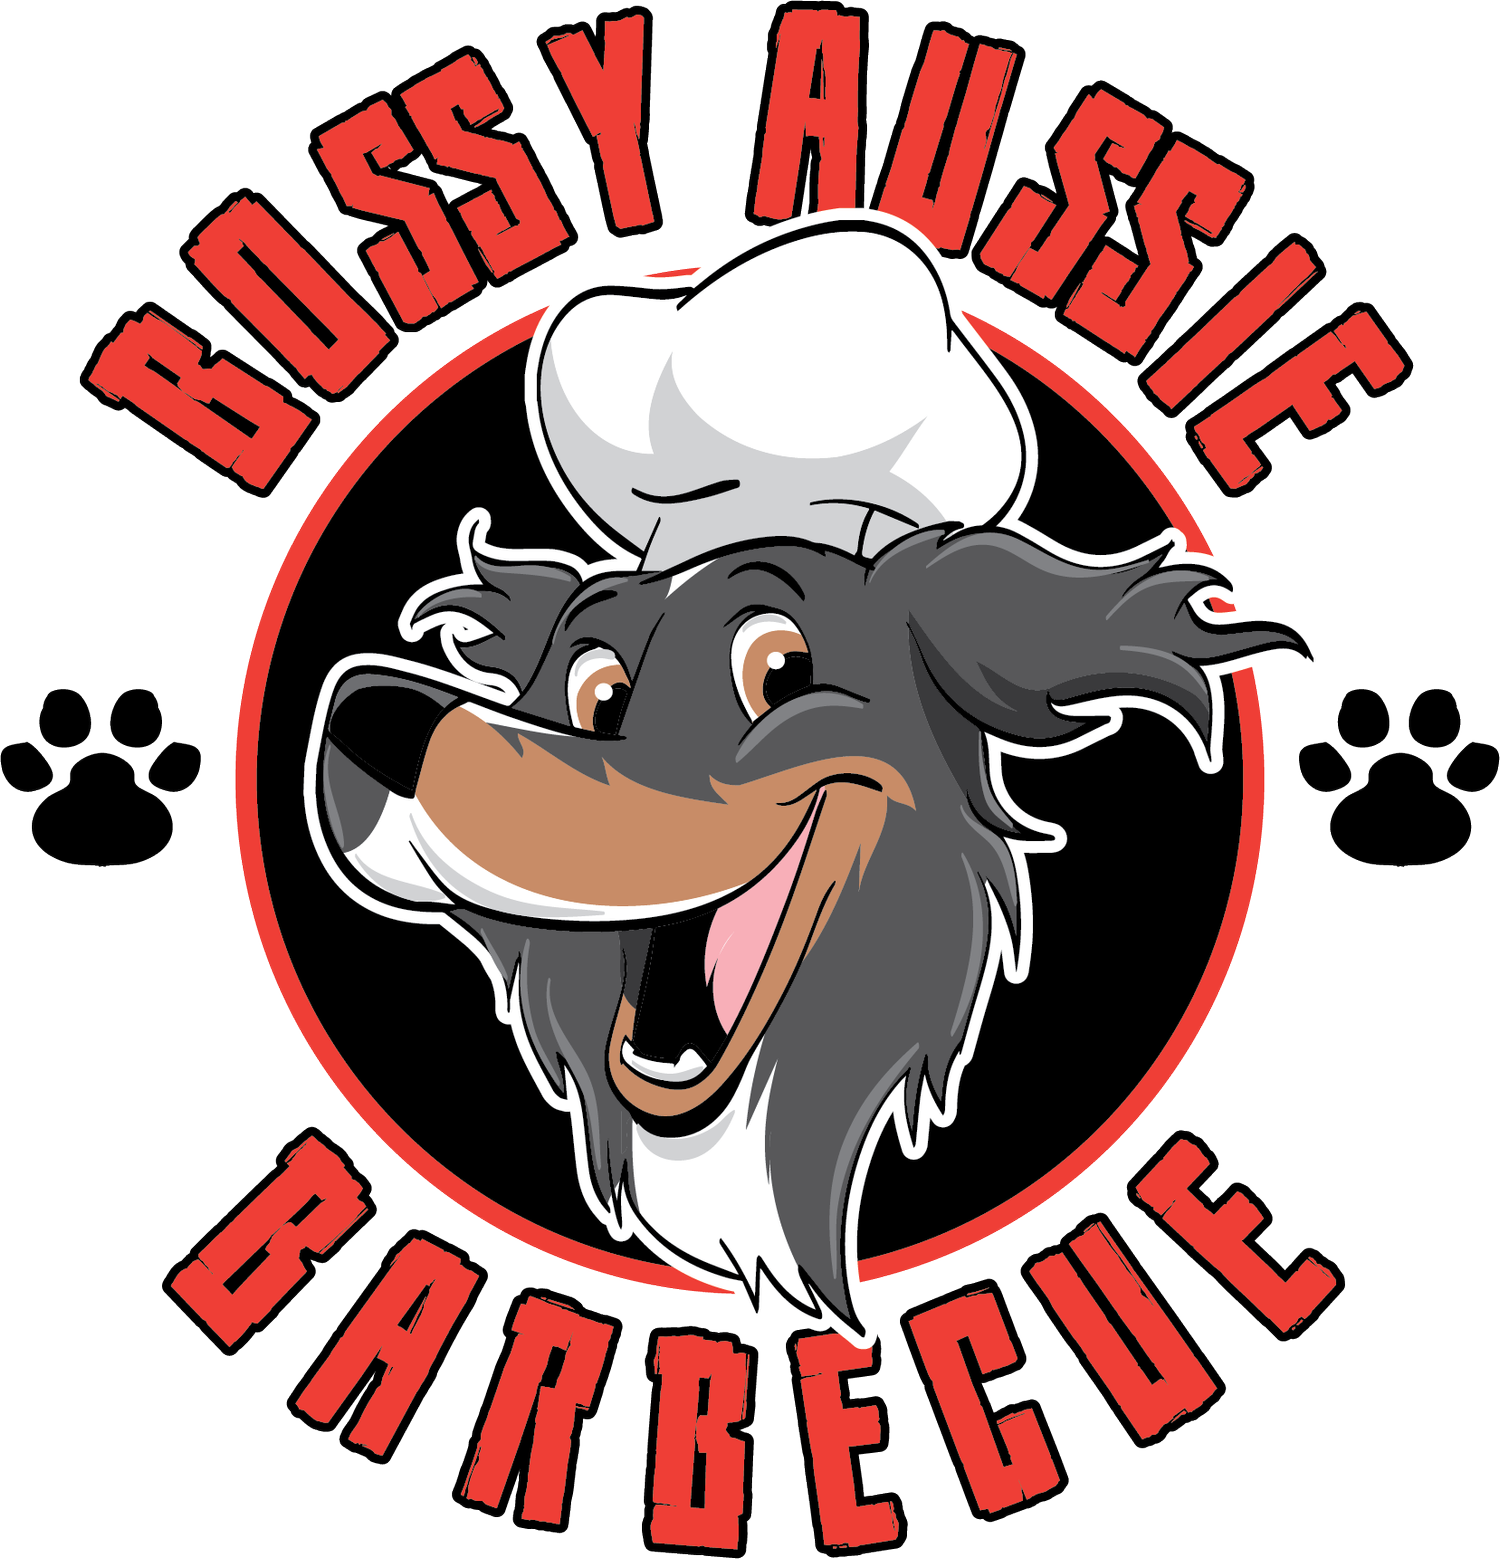  Bossy Aussie Barbecue, LLC